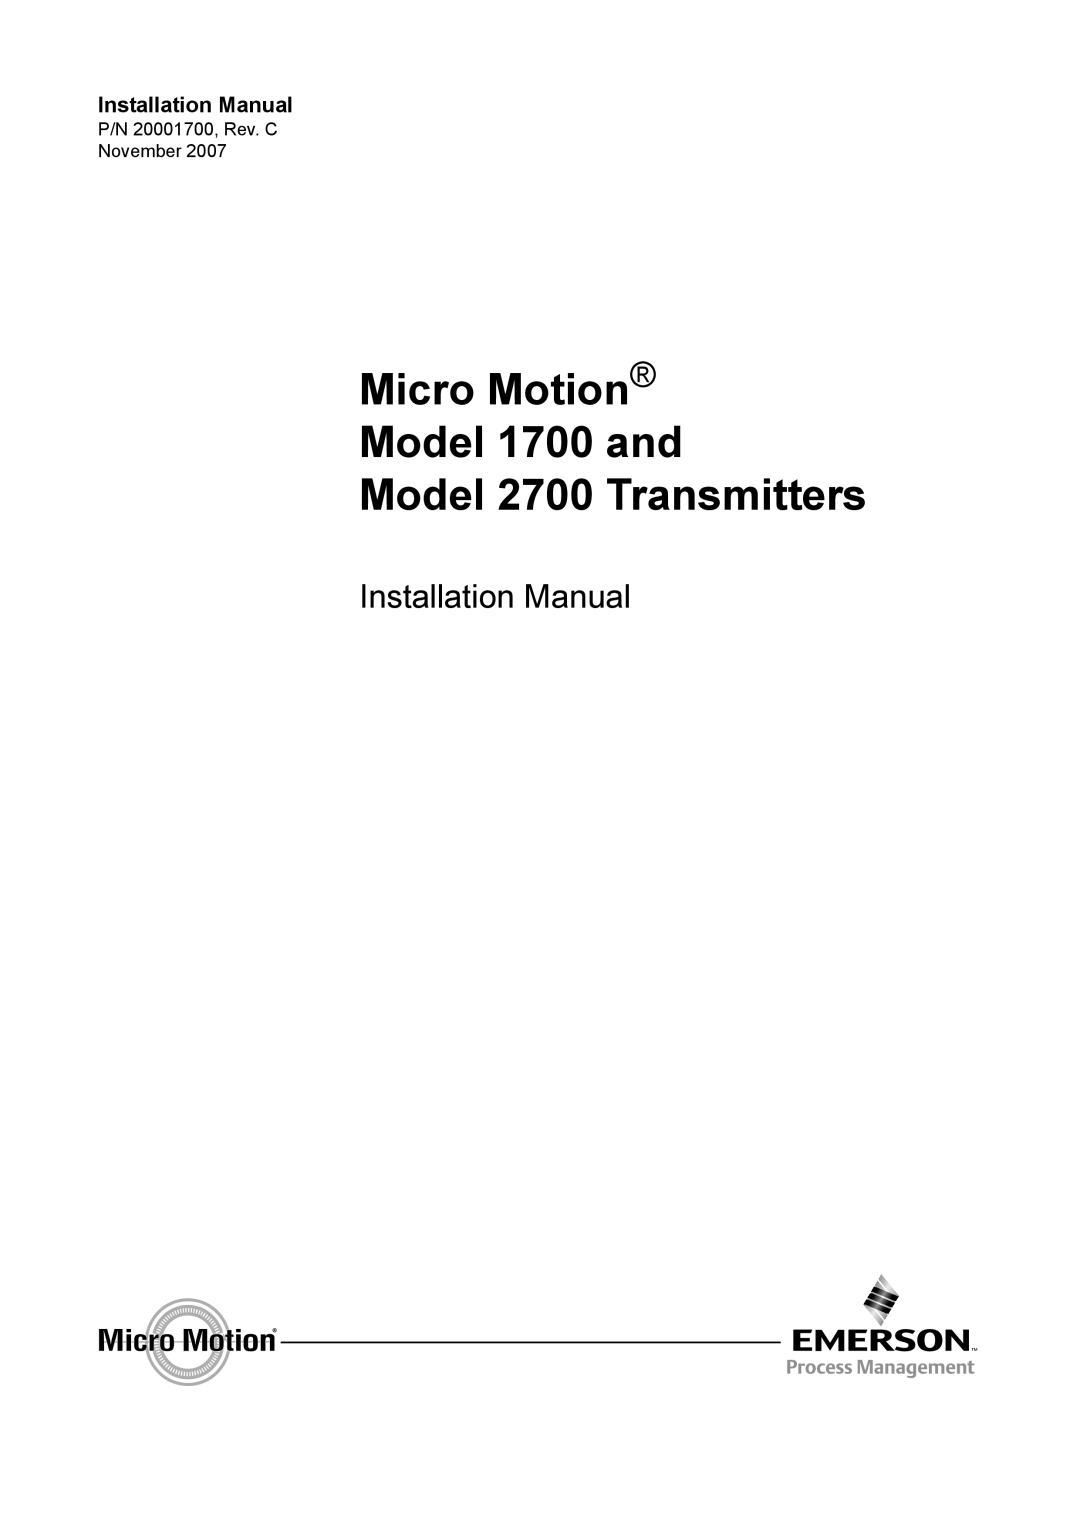 Emerson installation manual Micro Motion Model 1700 and, Model 2700 Transmitters, Installation Manual 